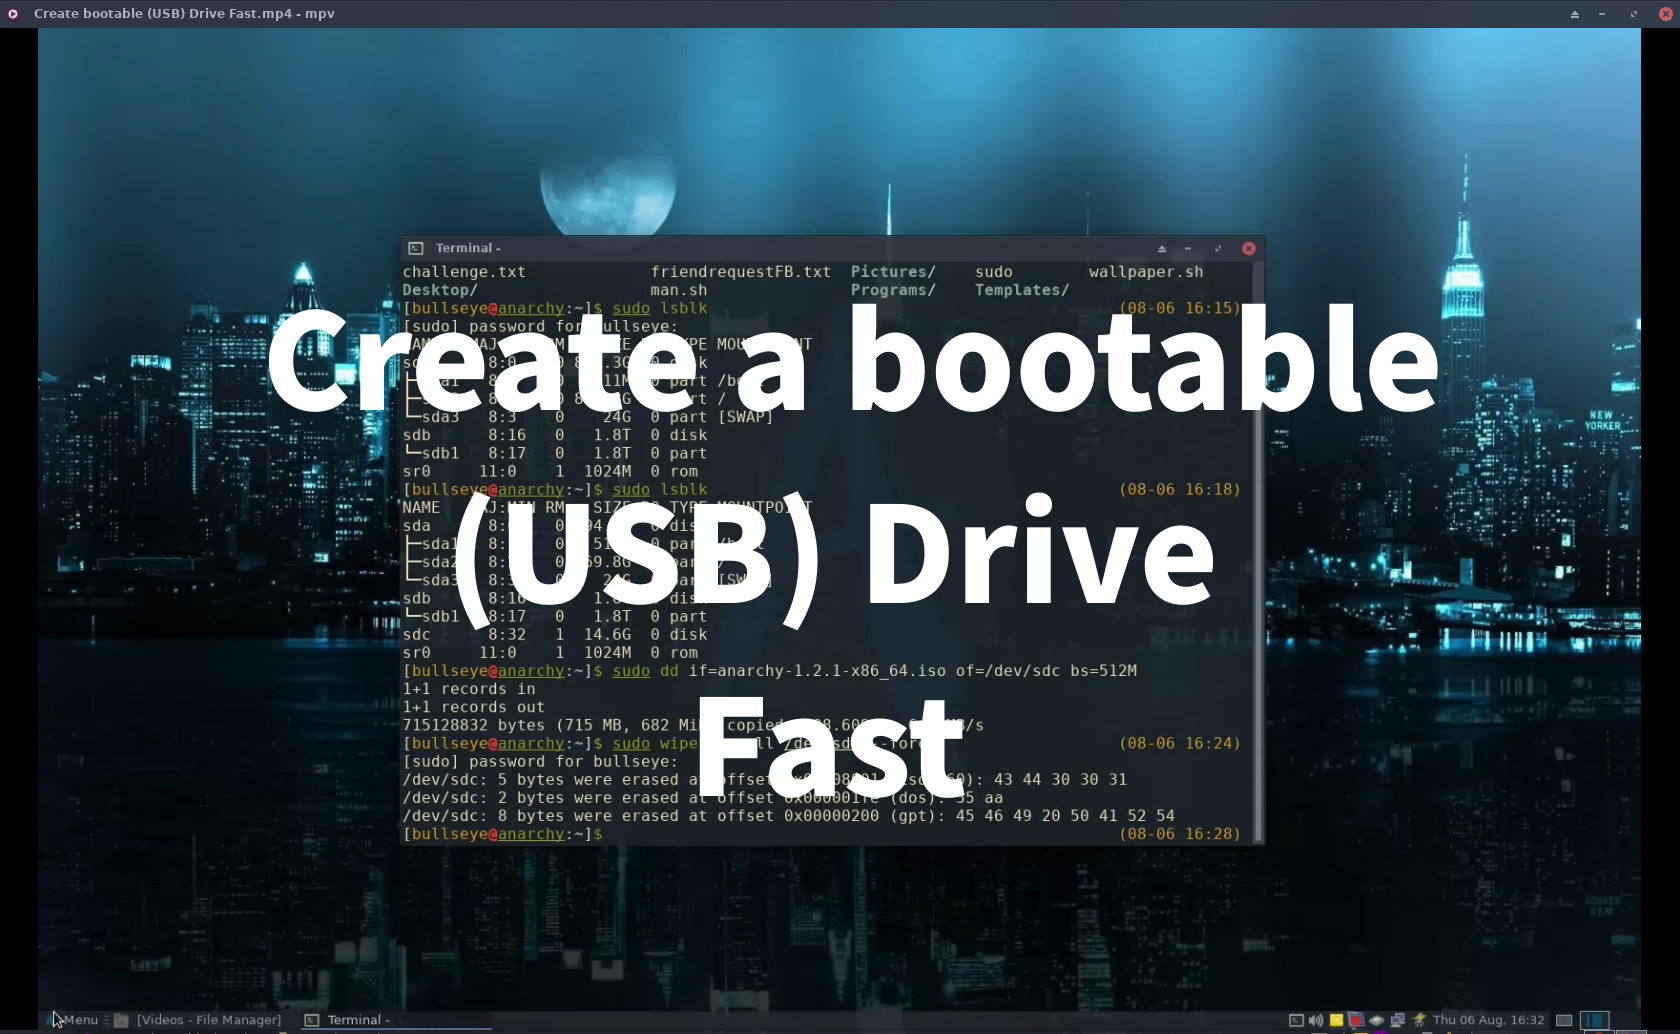 bootable (USB) Drive fast - : root@HackingPassion.com-[~]